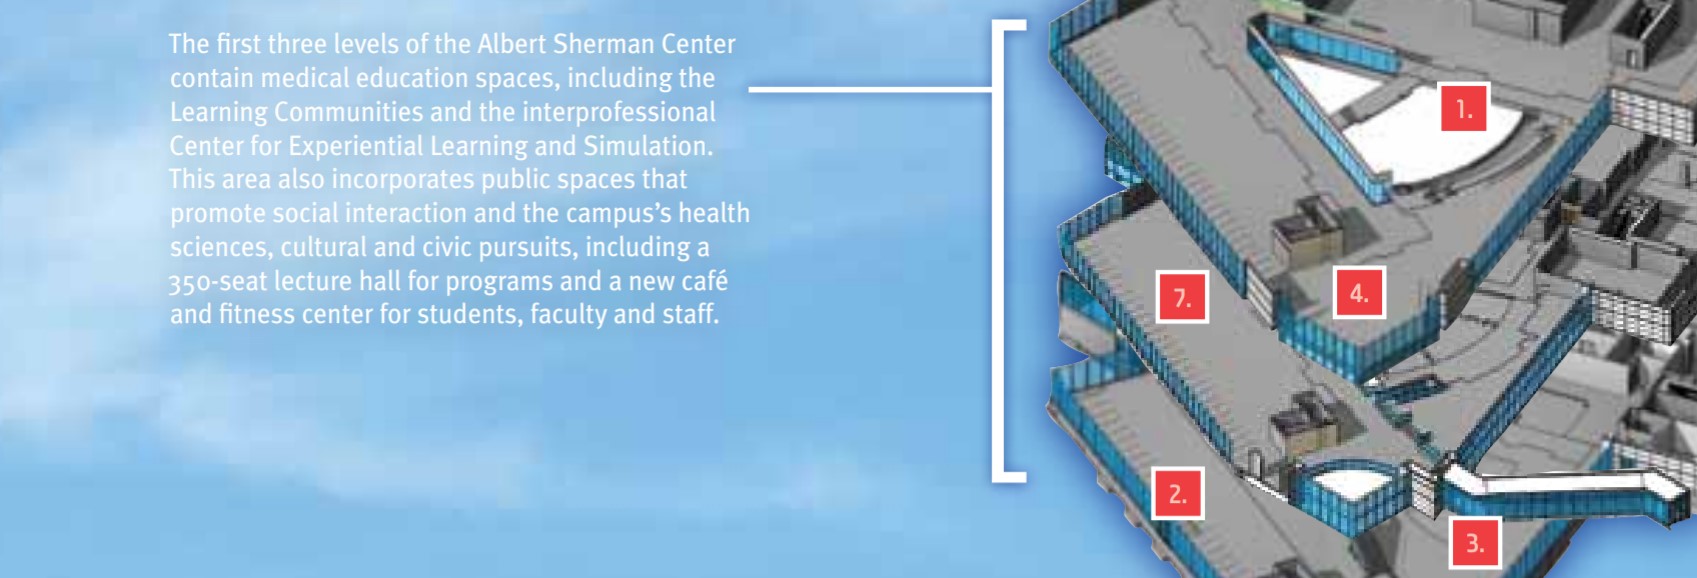 iCELS-Level-2-and-3-Albert-Sherman-Building.jpg